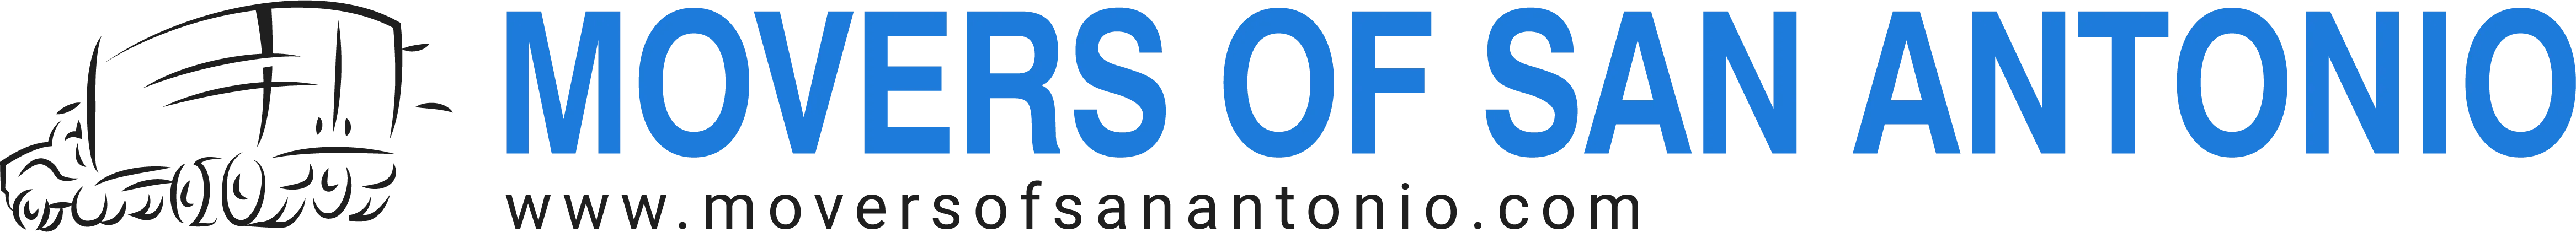 Movers of San Antonio logo